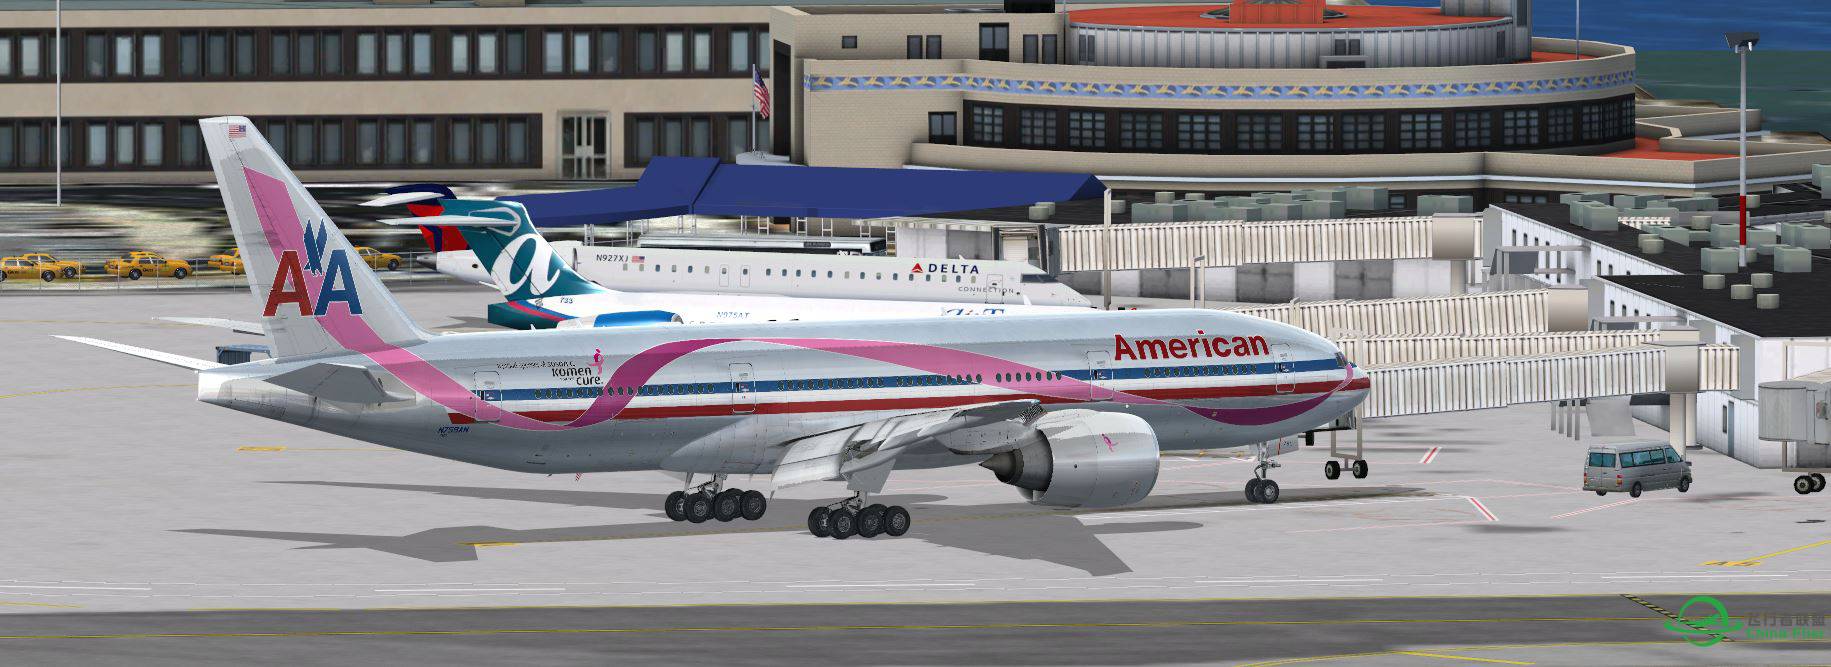 B777 American Airline-2649 